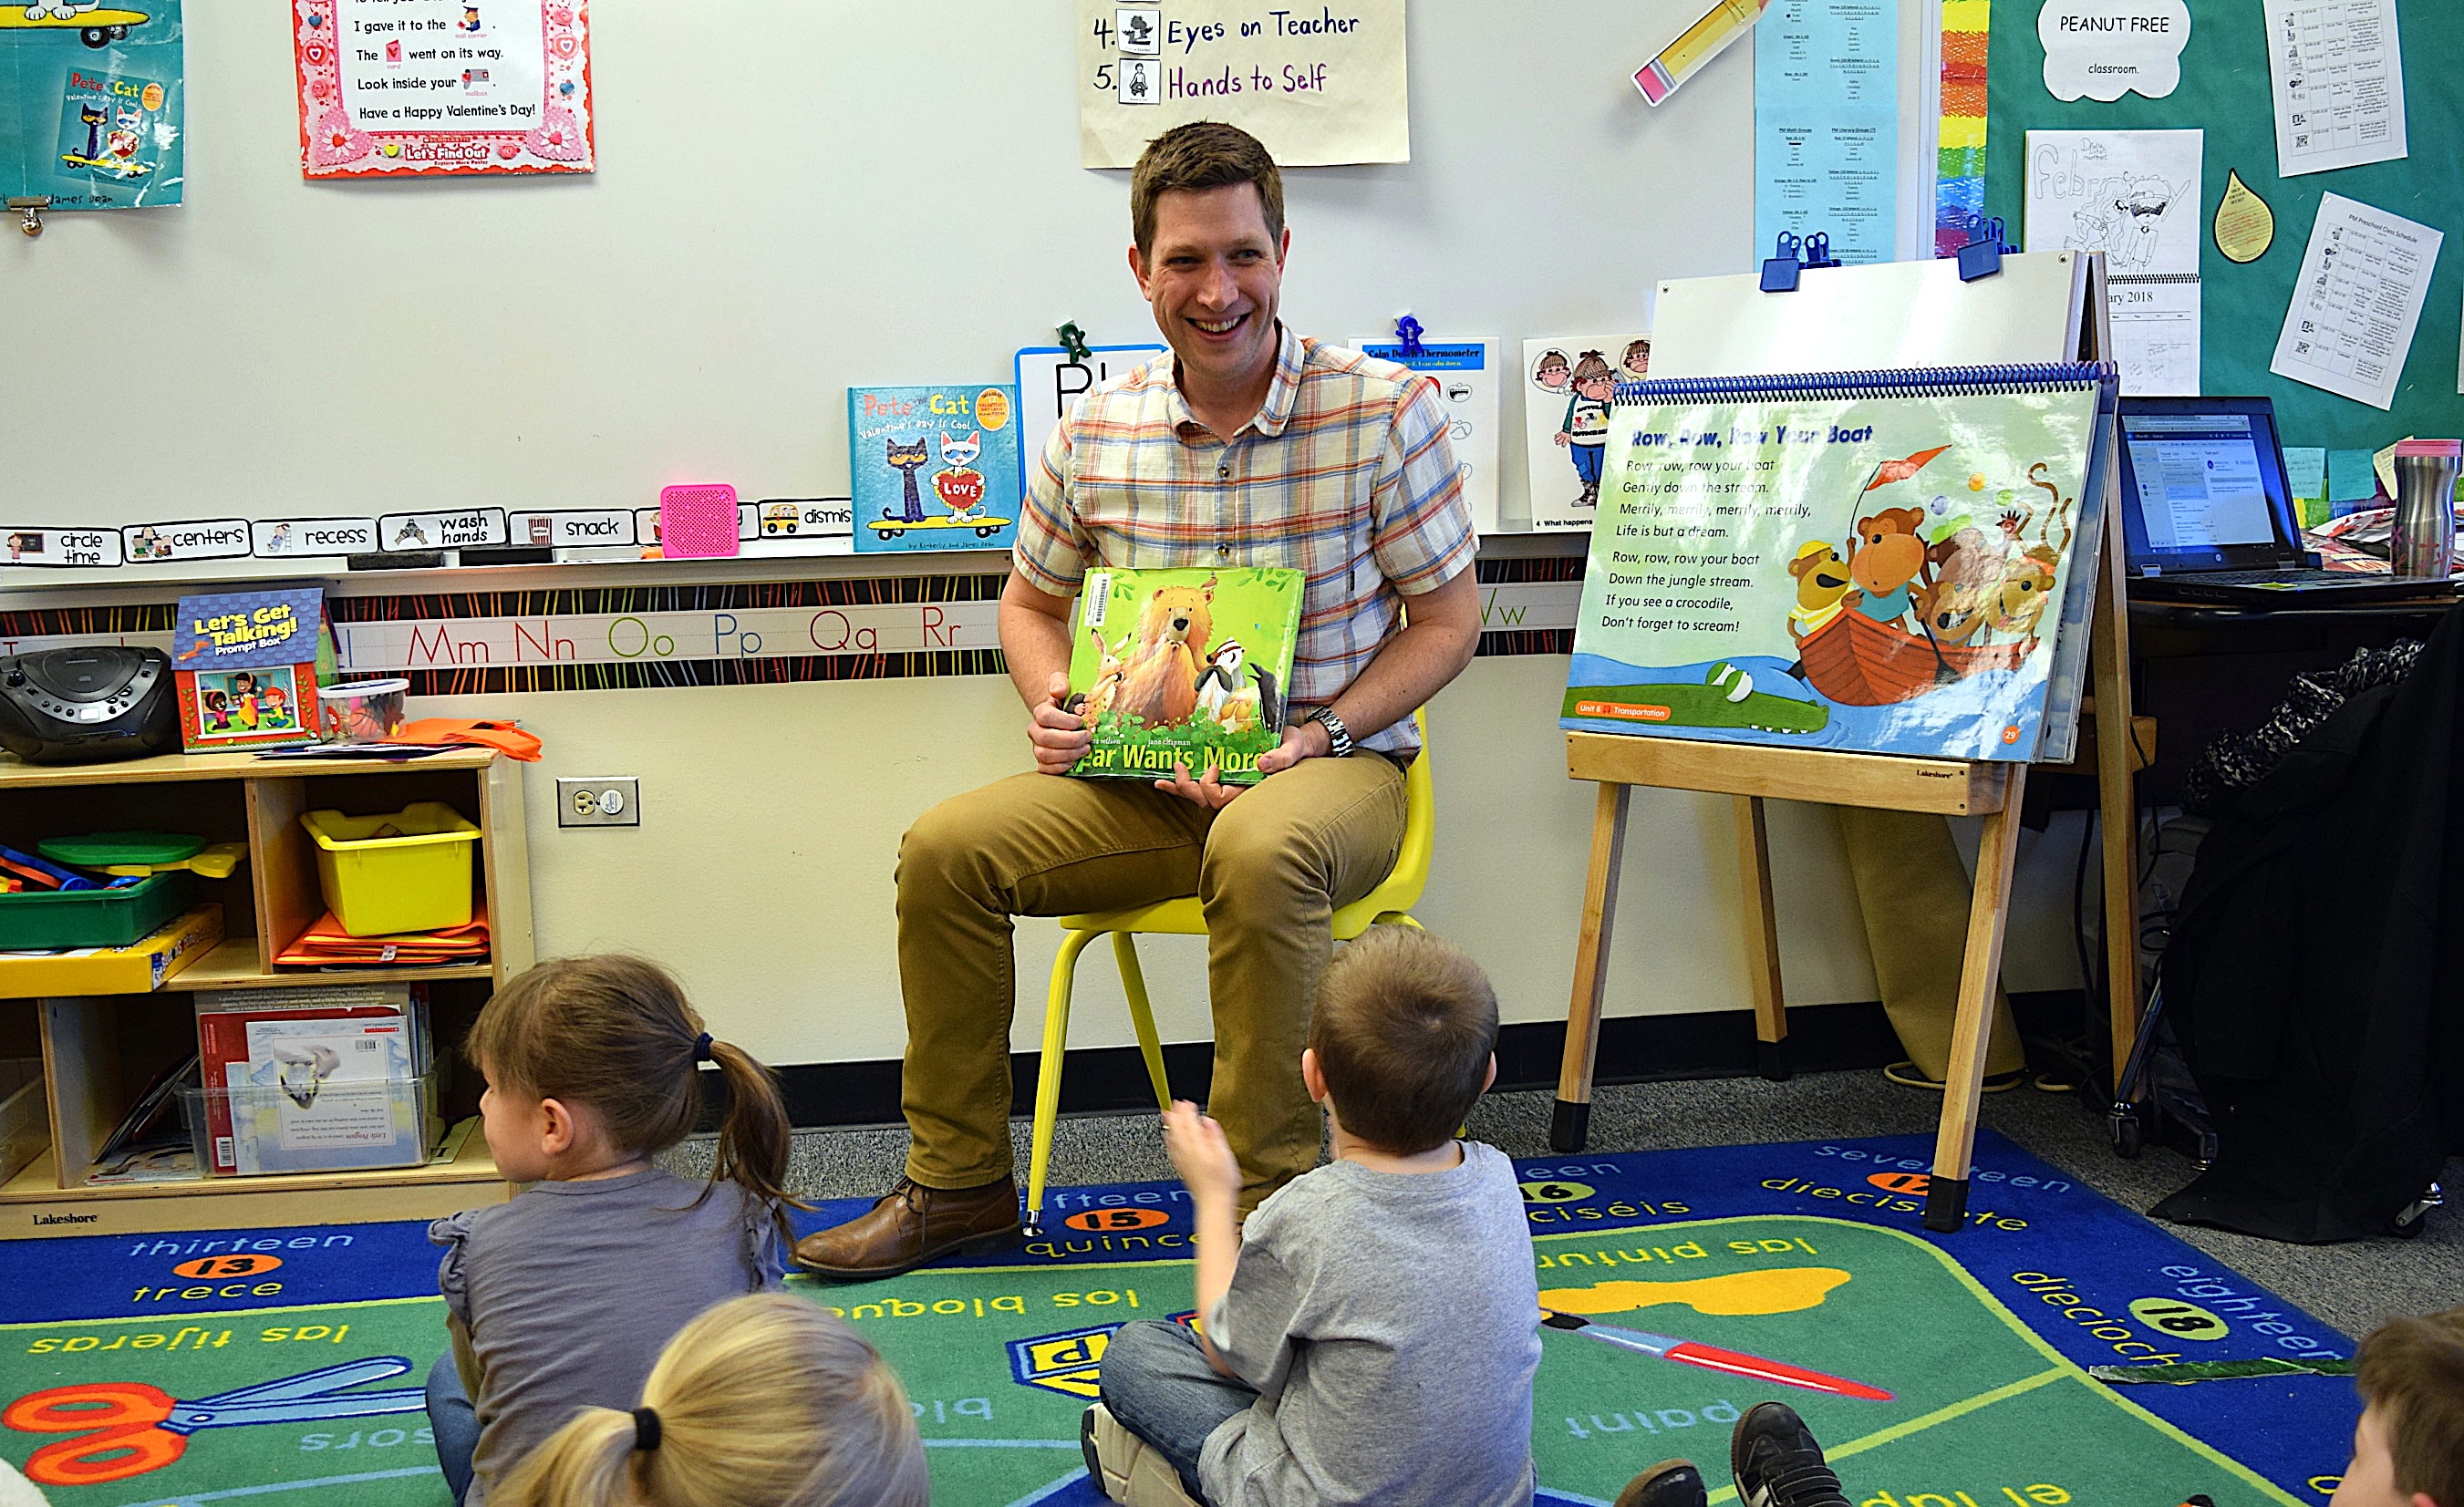 Dan Haught, a speech-language pathologist at Mesa Elementary School in Westminster Public Schools, with children in a preschool classroom.